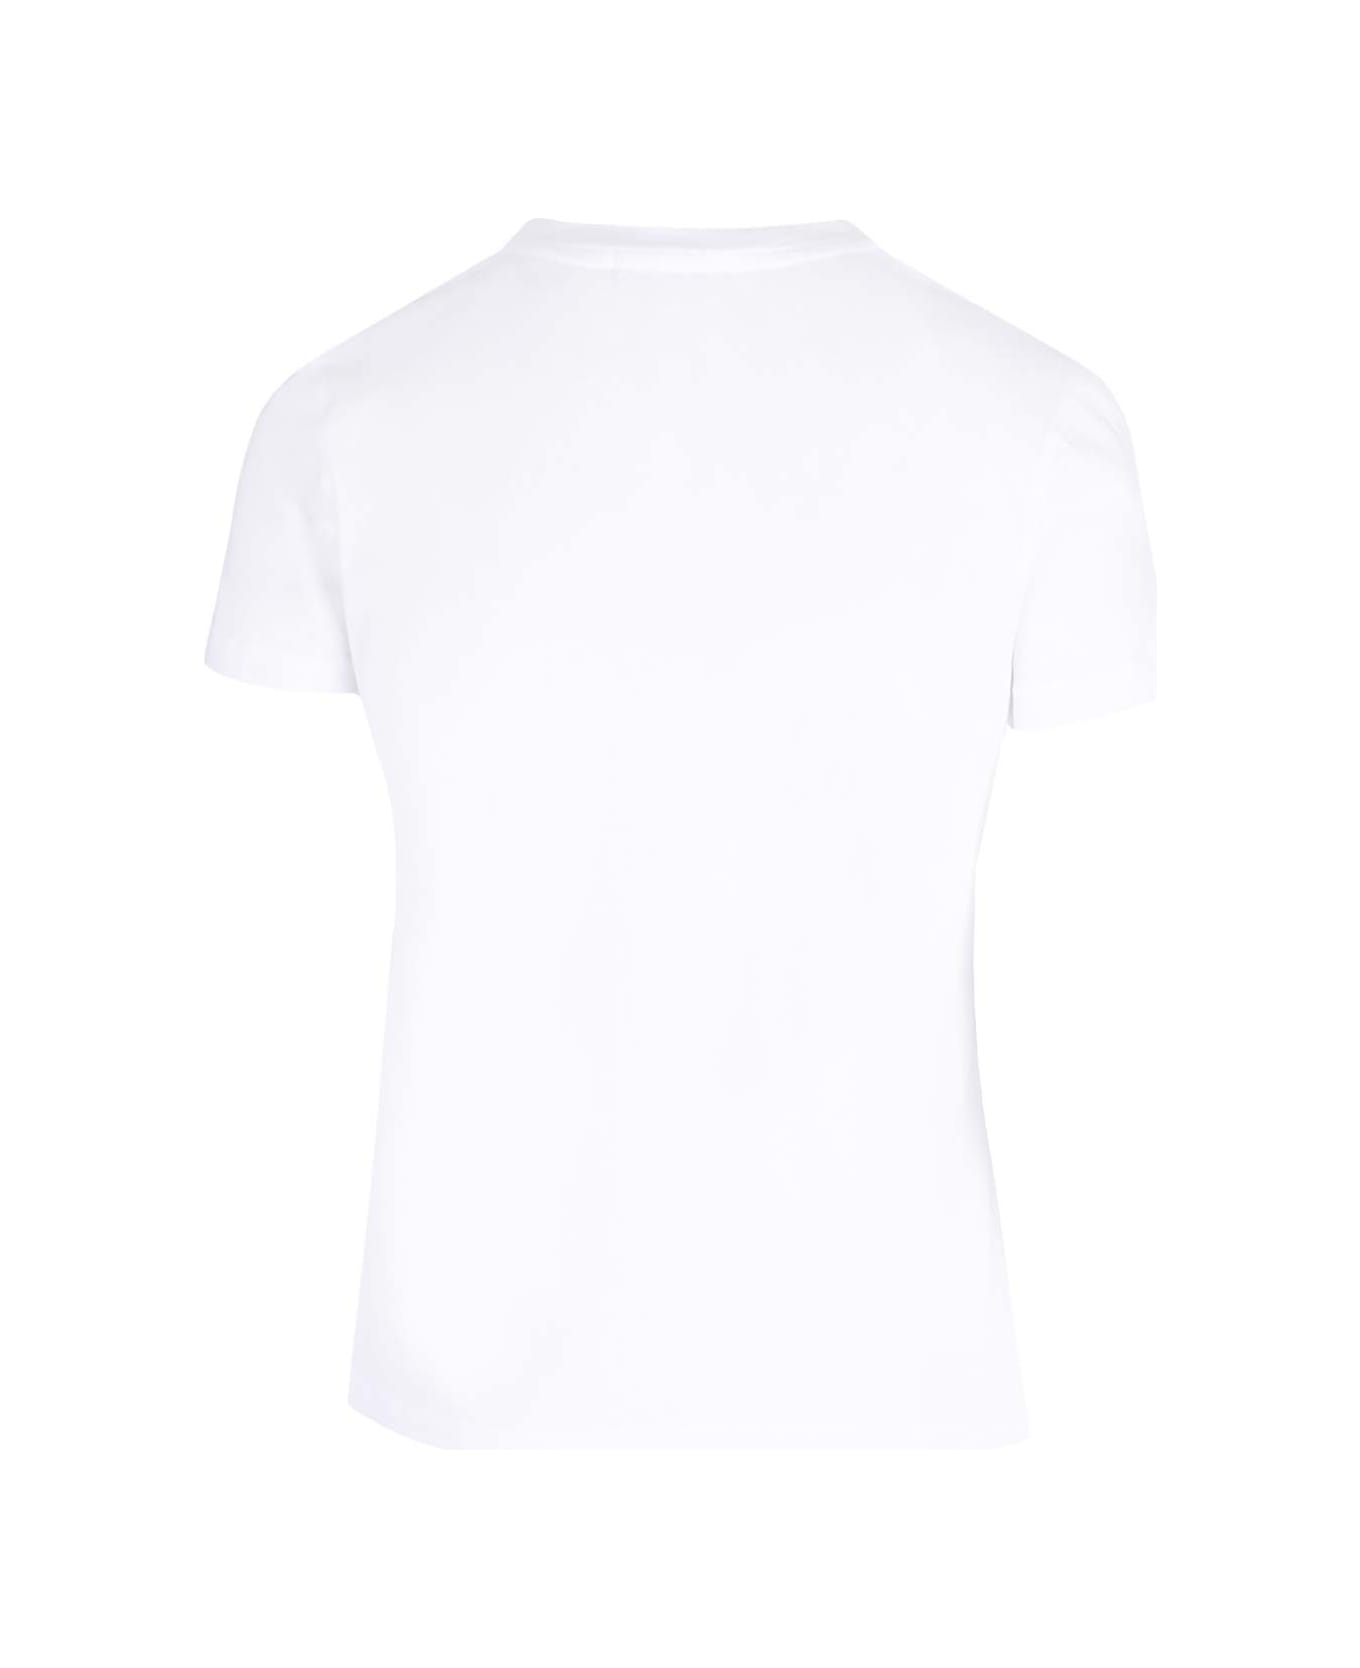 James Perse Basic T-shirt - Wht White